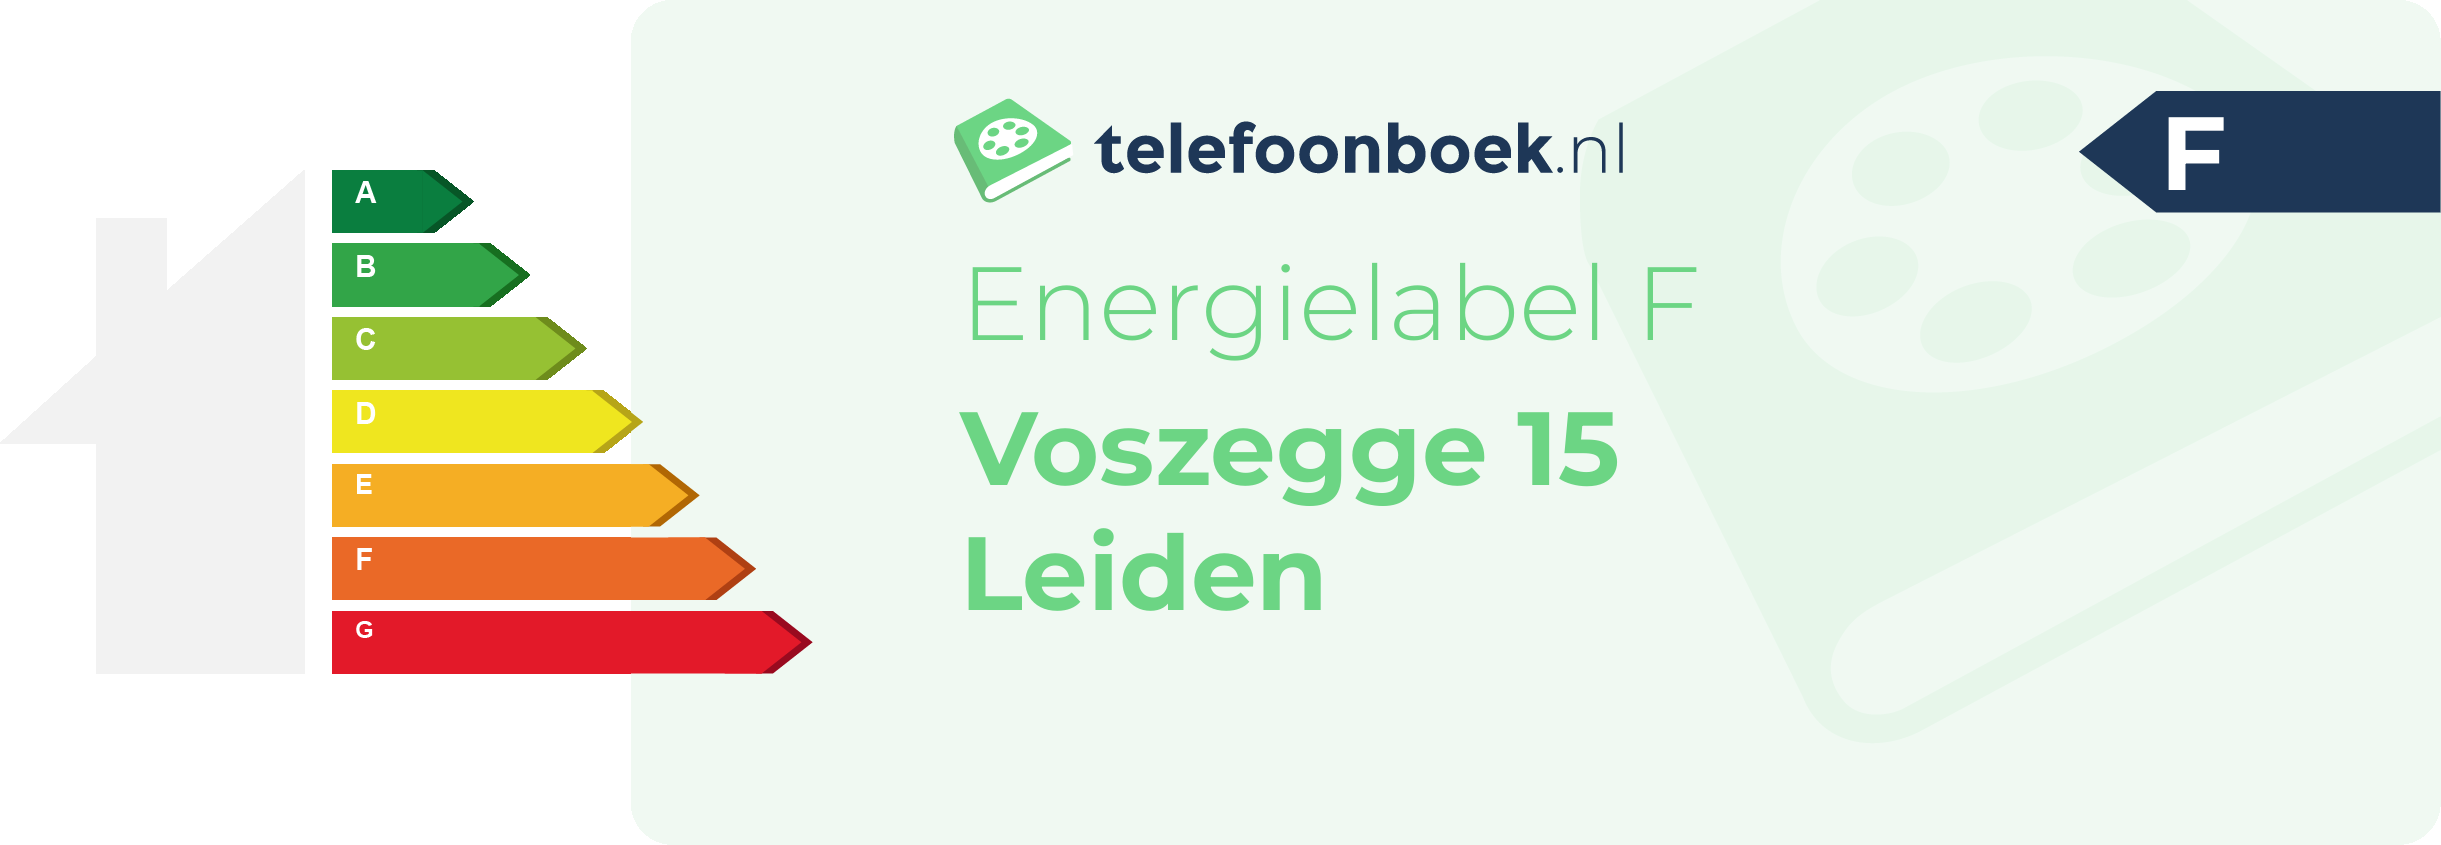 Energielabel Voszegge 15 Leiden